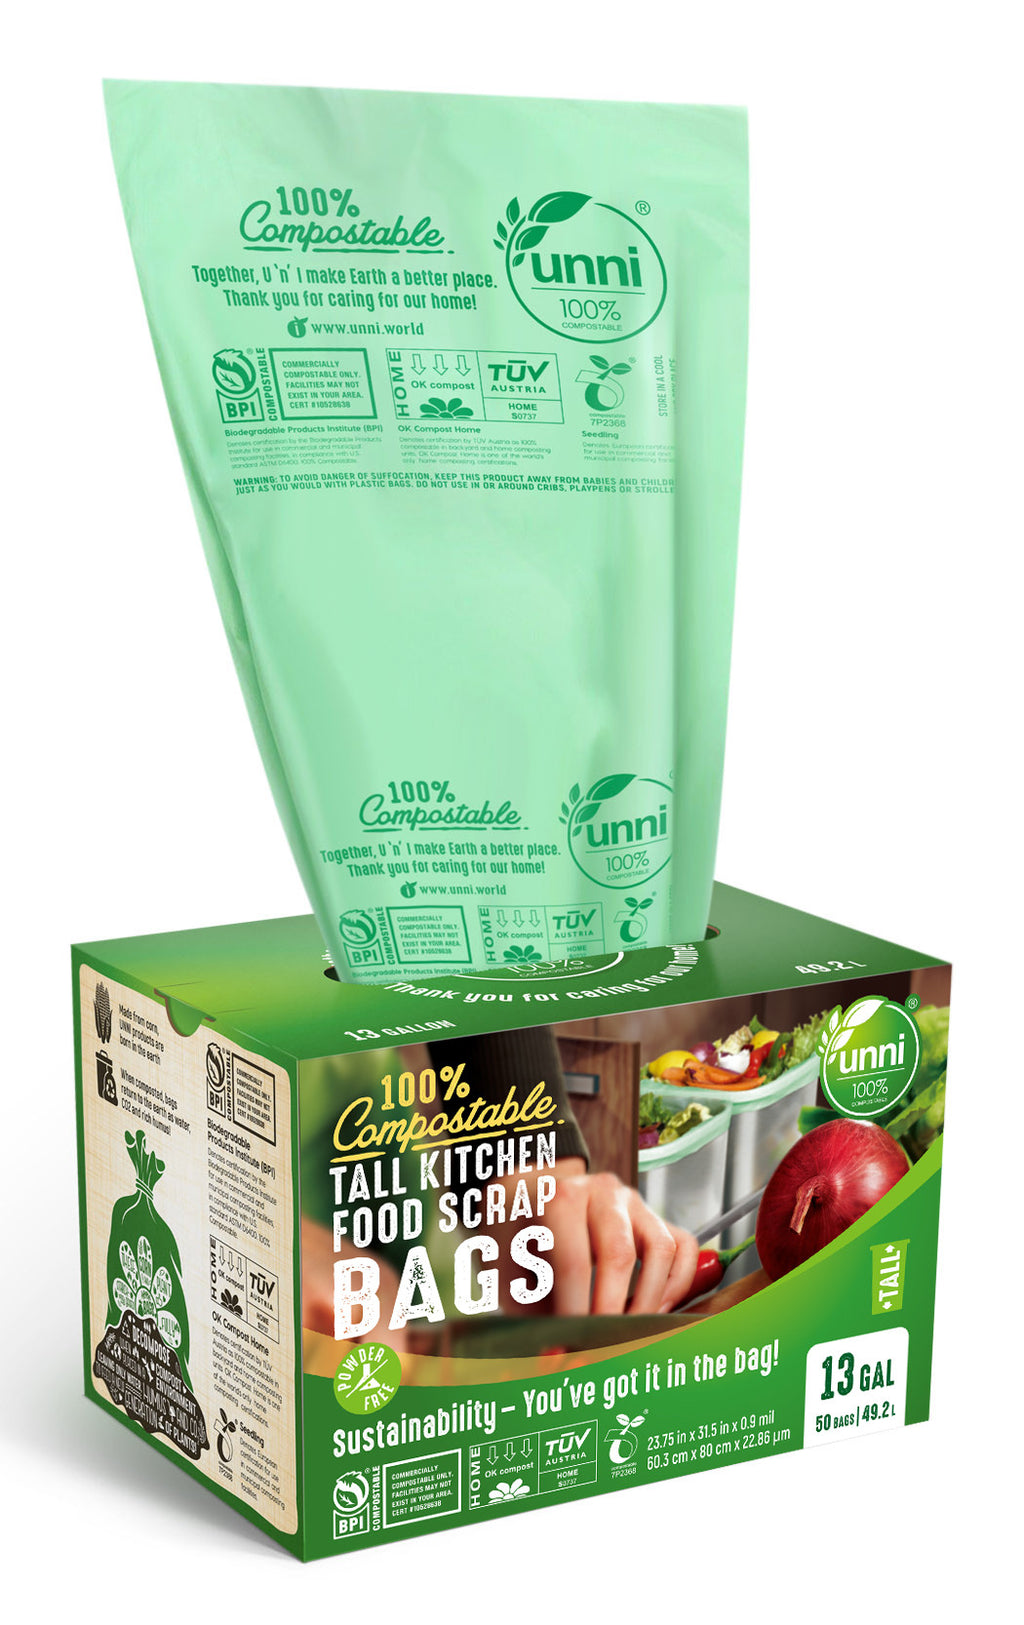  Compostable Trash Bags - FORID 13 Gallon Tall Kitchen